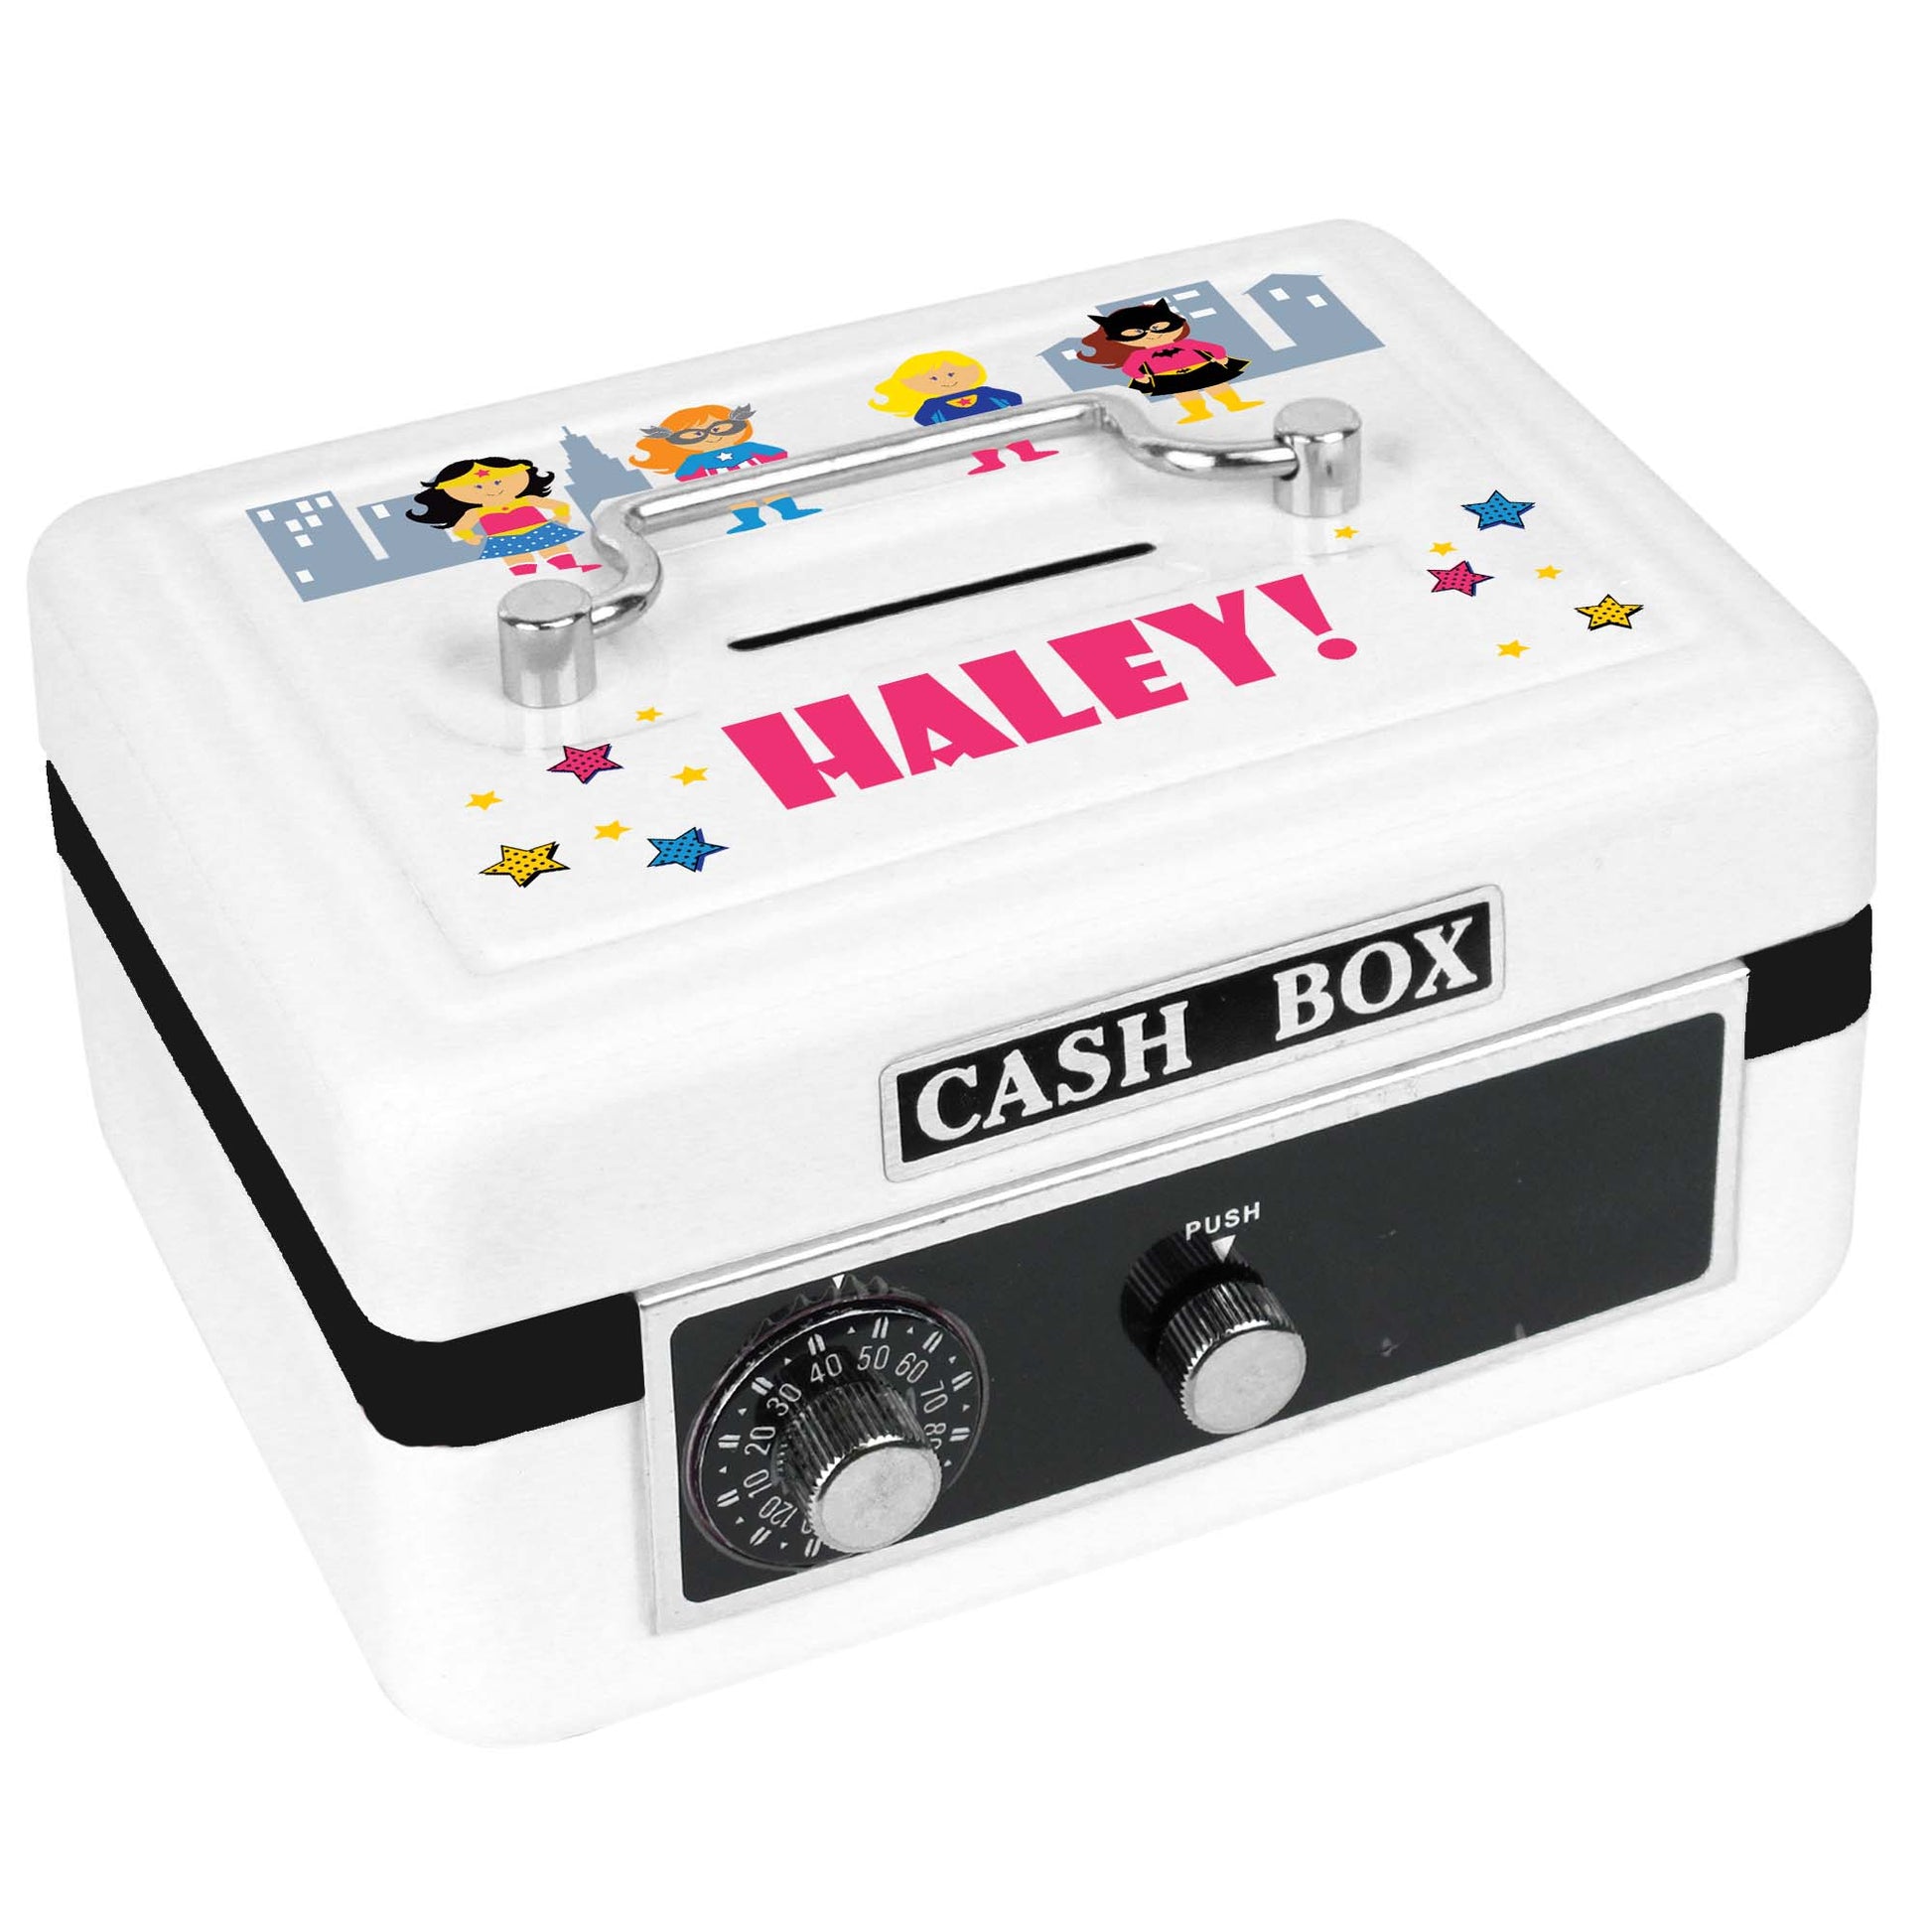 Personalized White Cash Box with Super Girls design